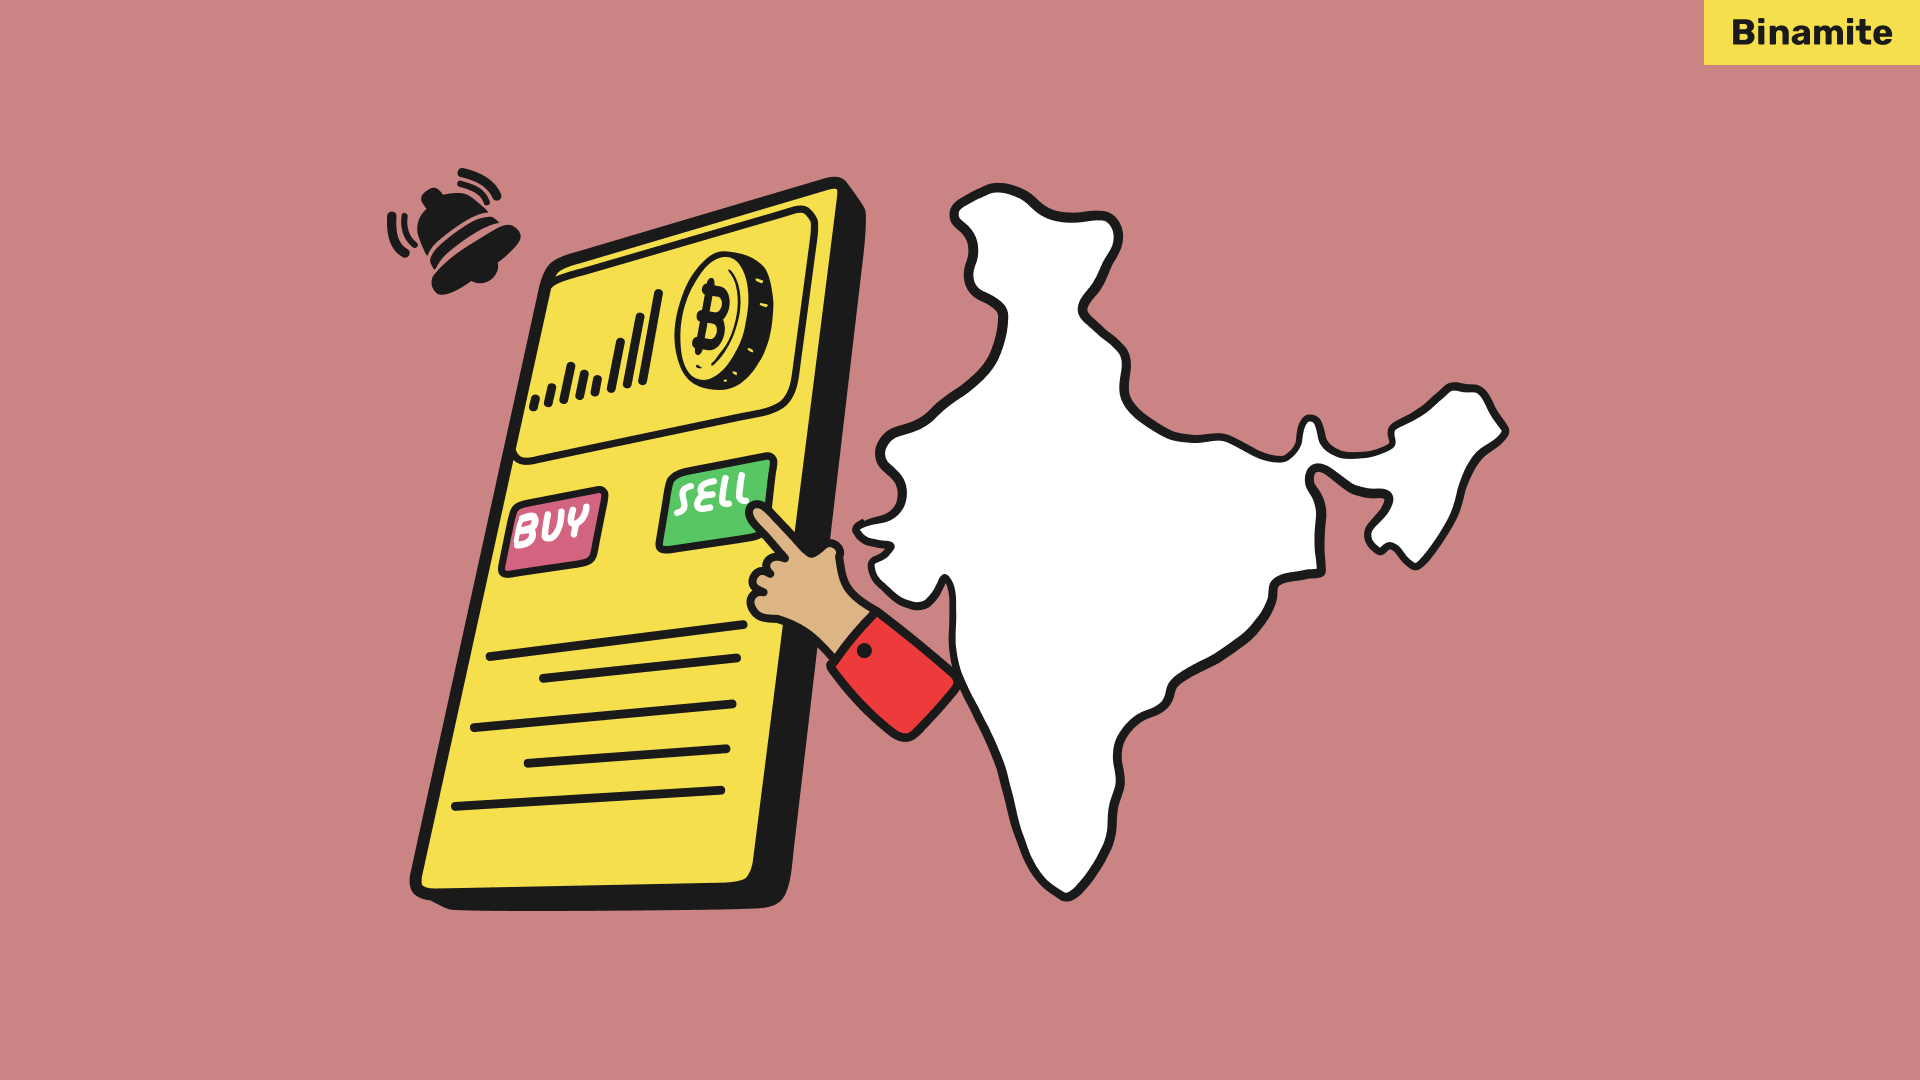 Indian P2P crypto scams